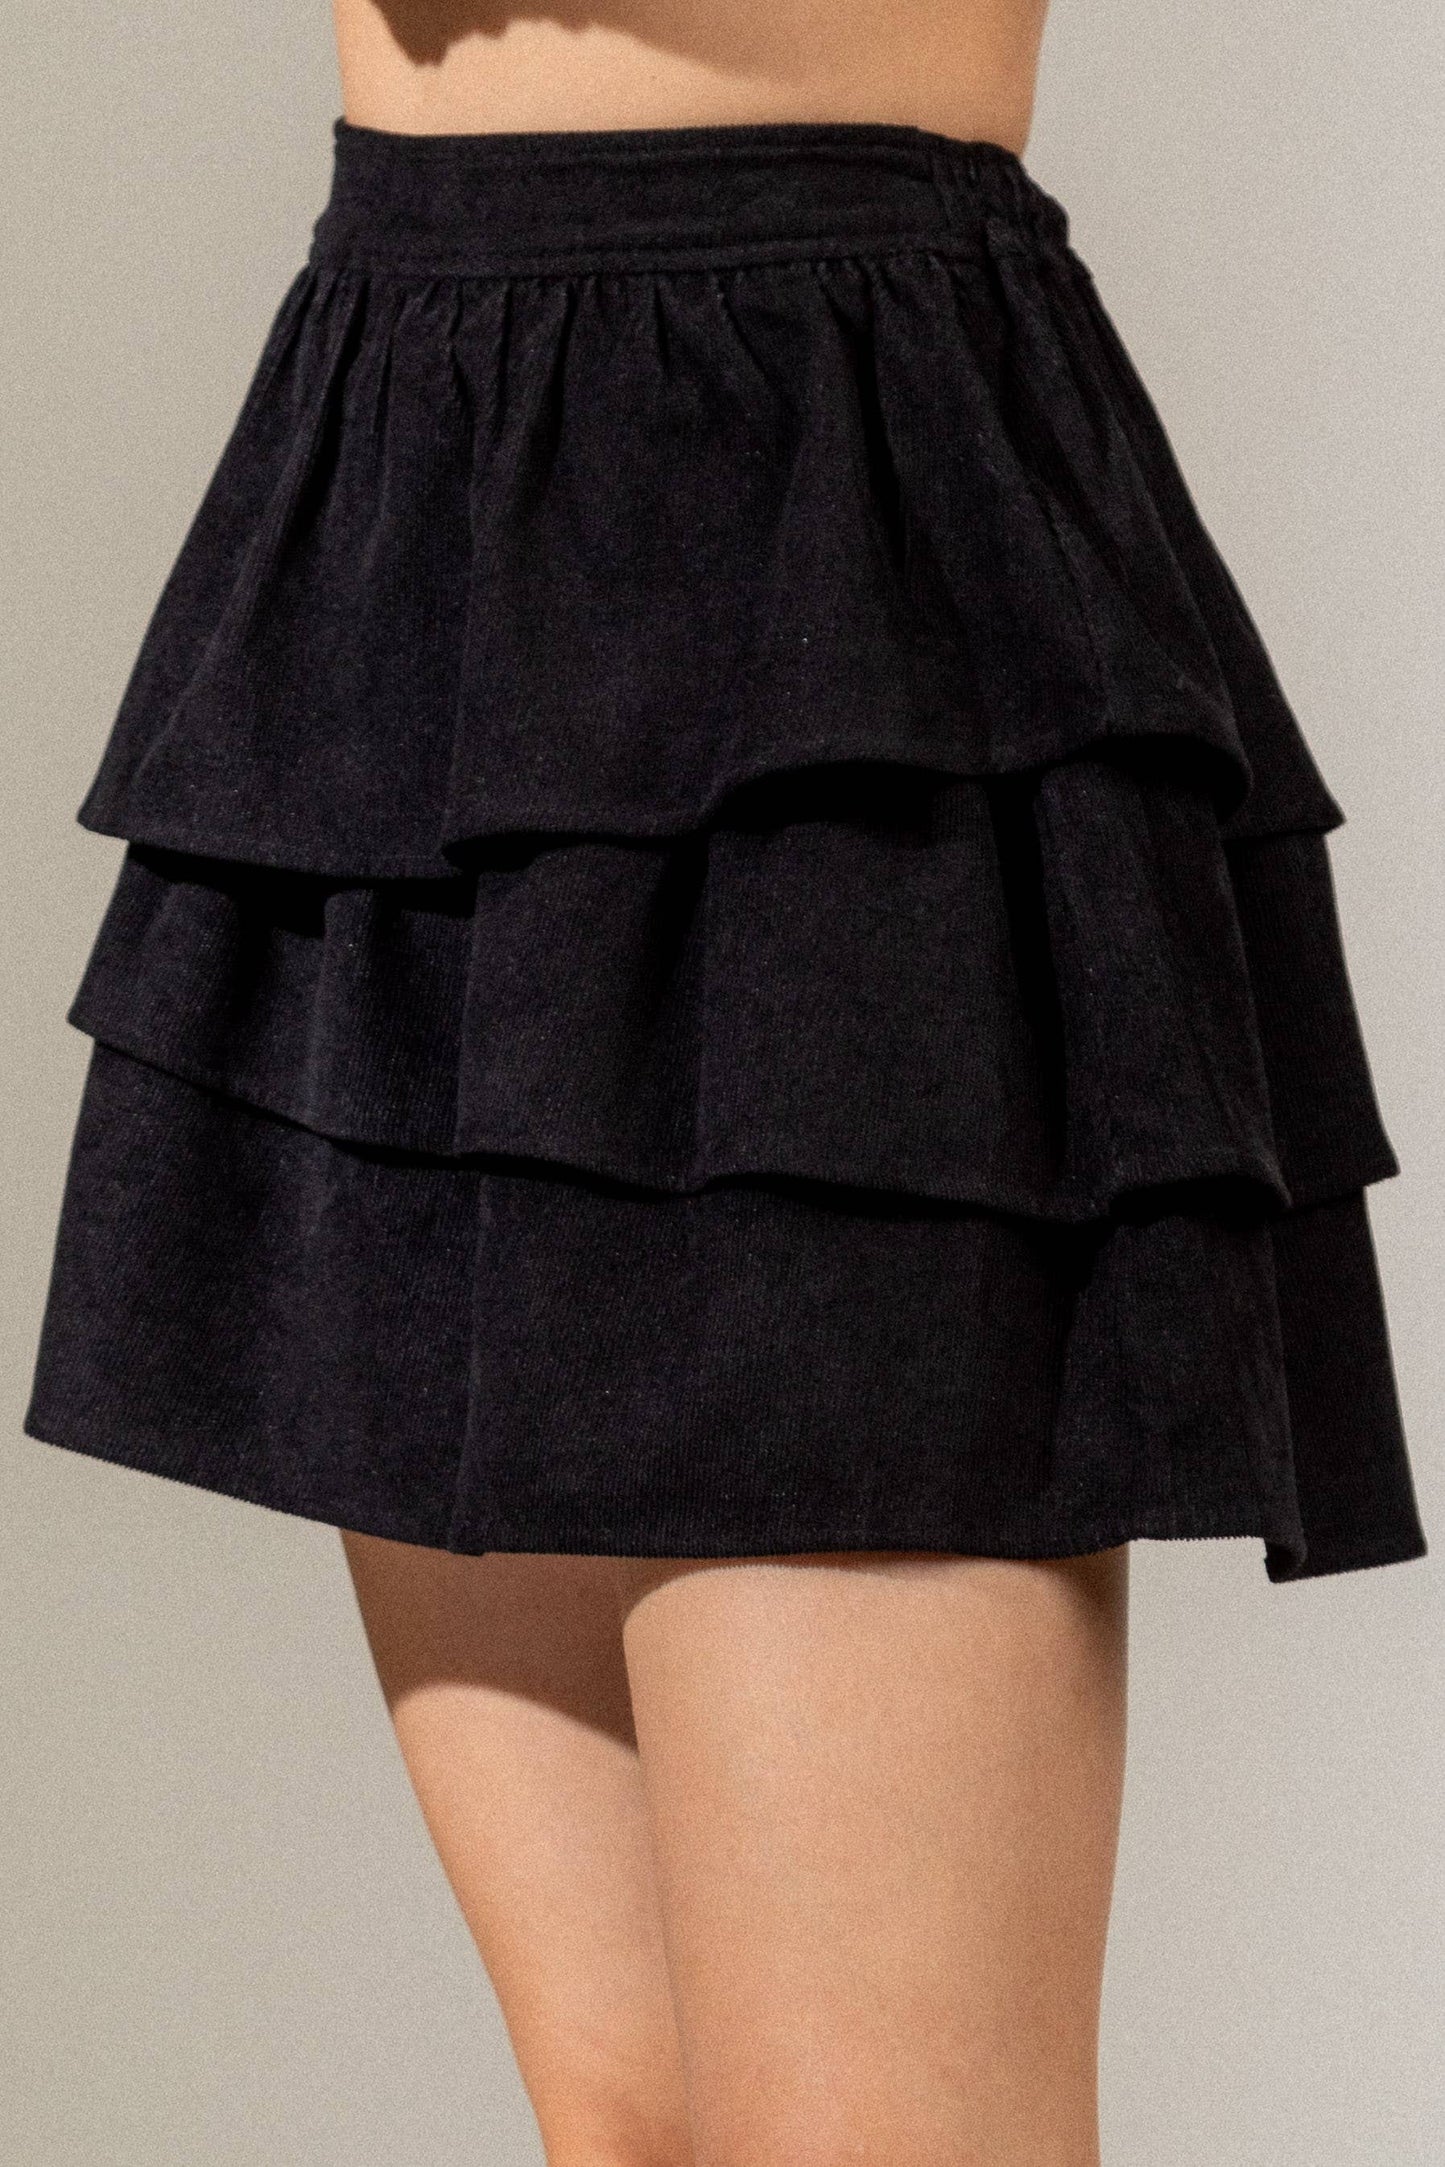 Ruffled Corduroy Solid Mini Skirt.